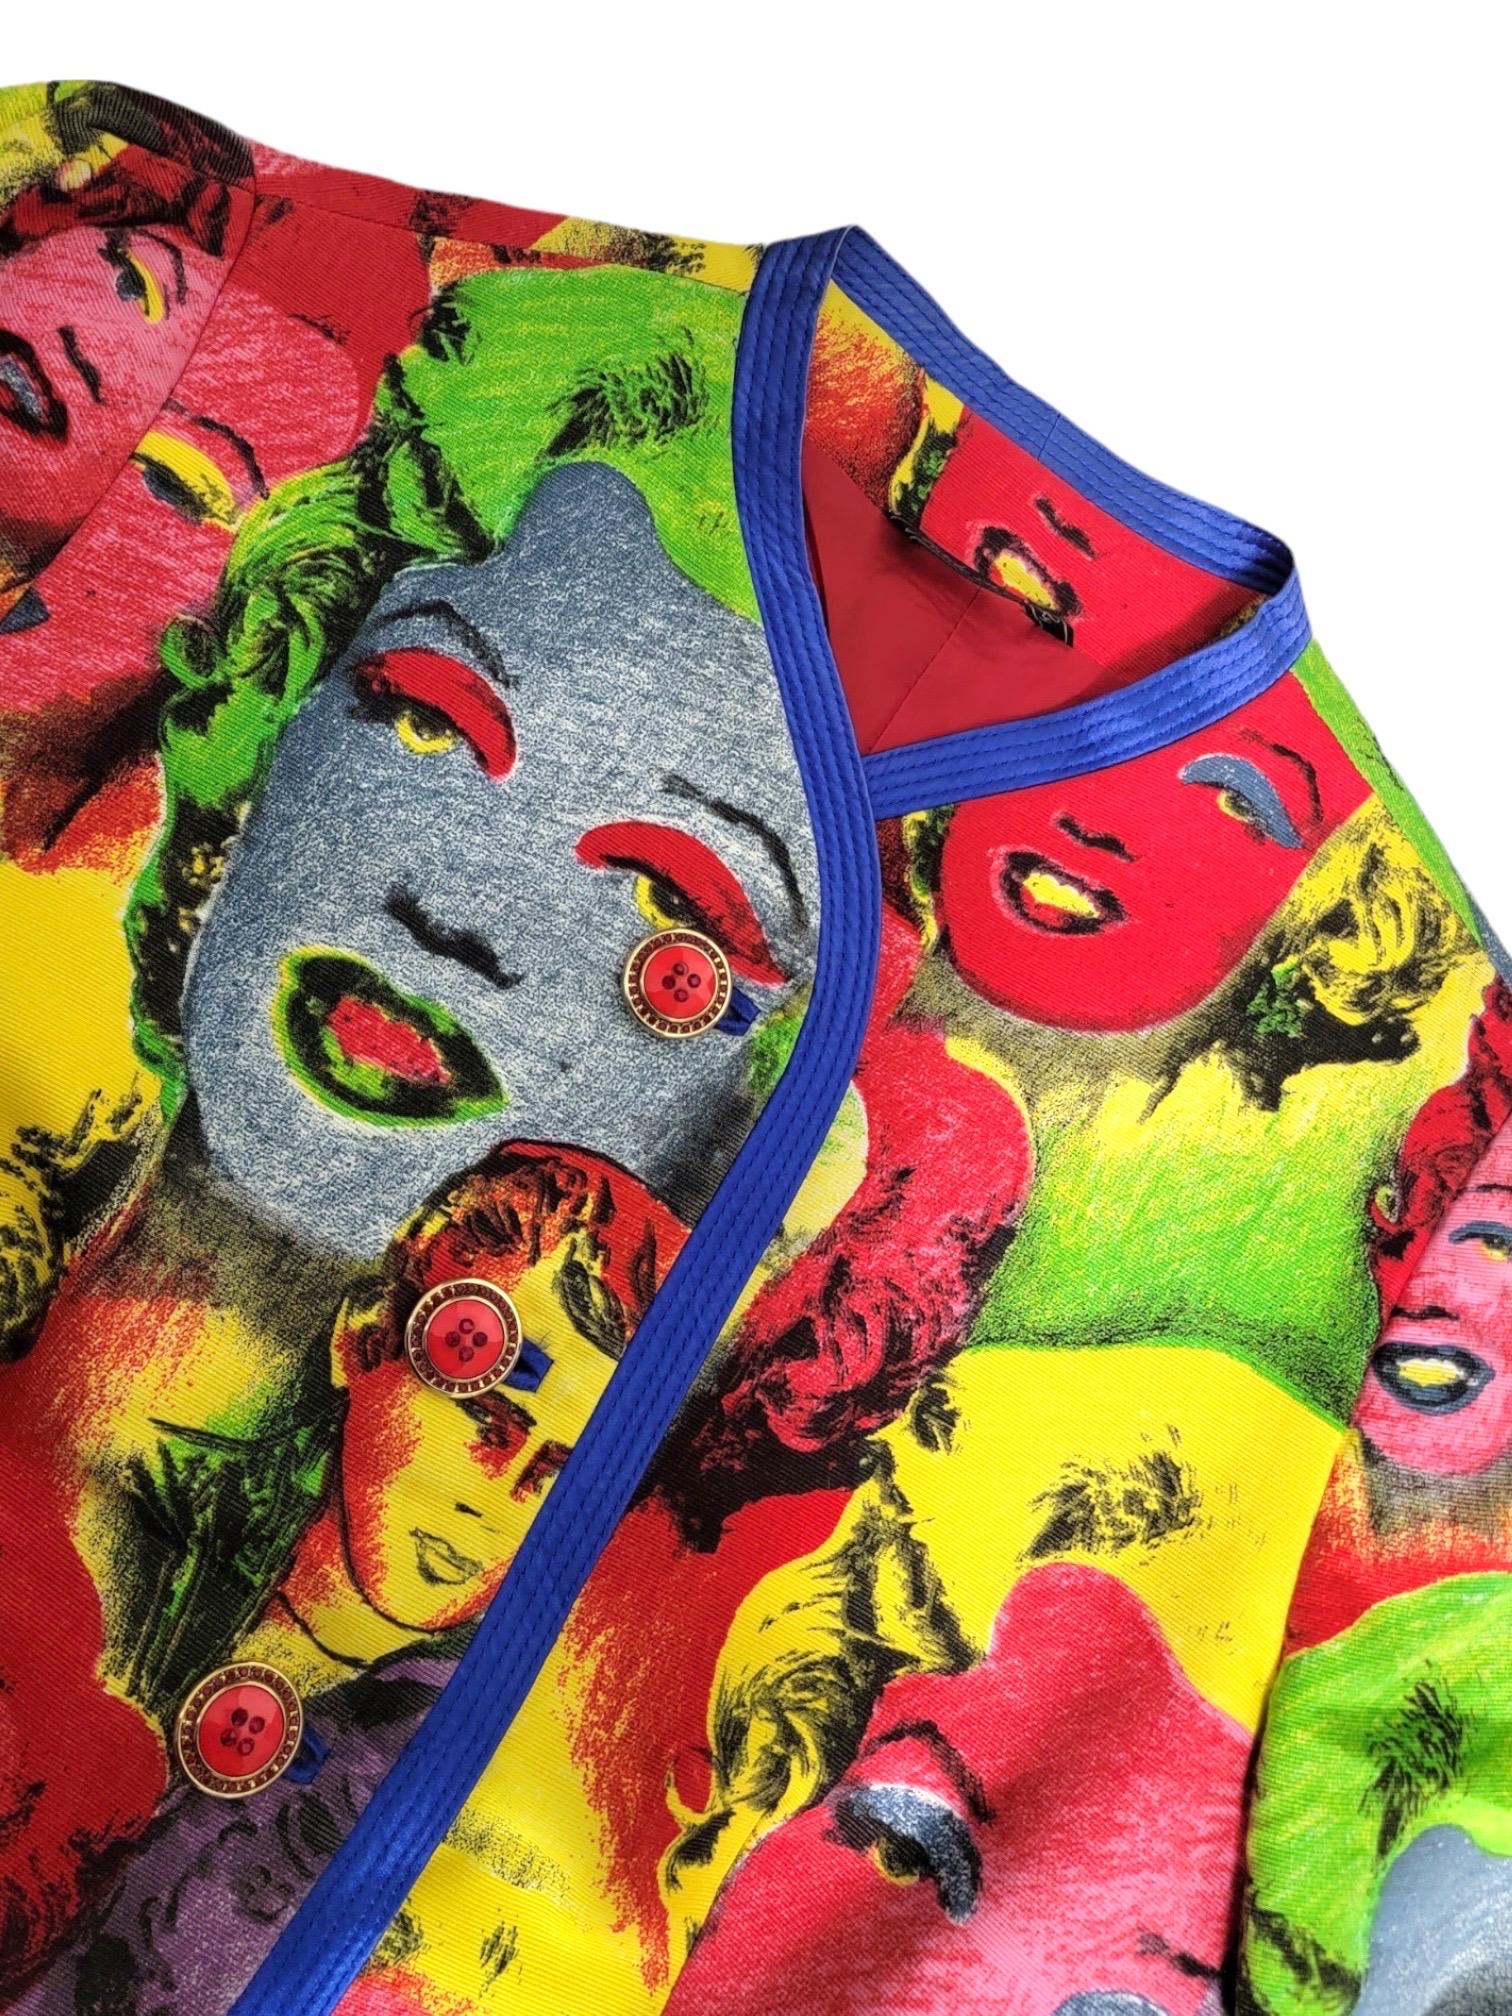  S/S 1991 Gianni Versace Marilyn Monroe Pop Art Warhol Skirt Suit For Sale 9